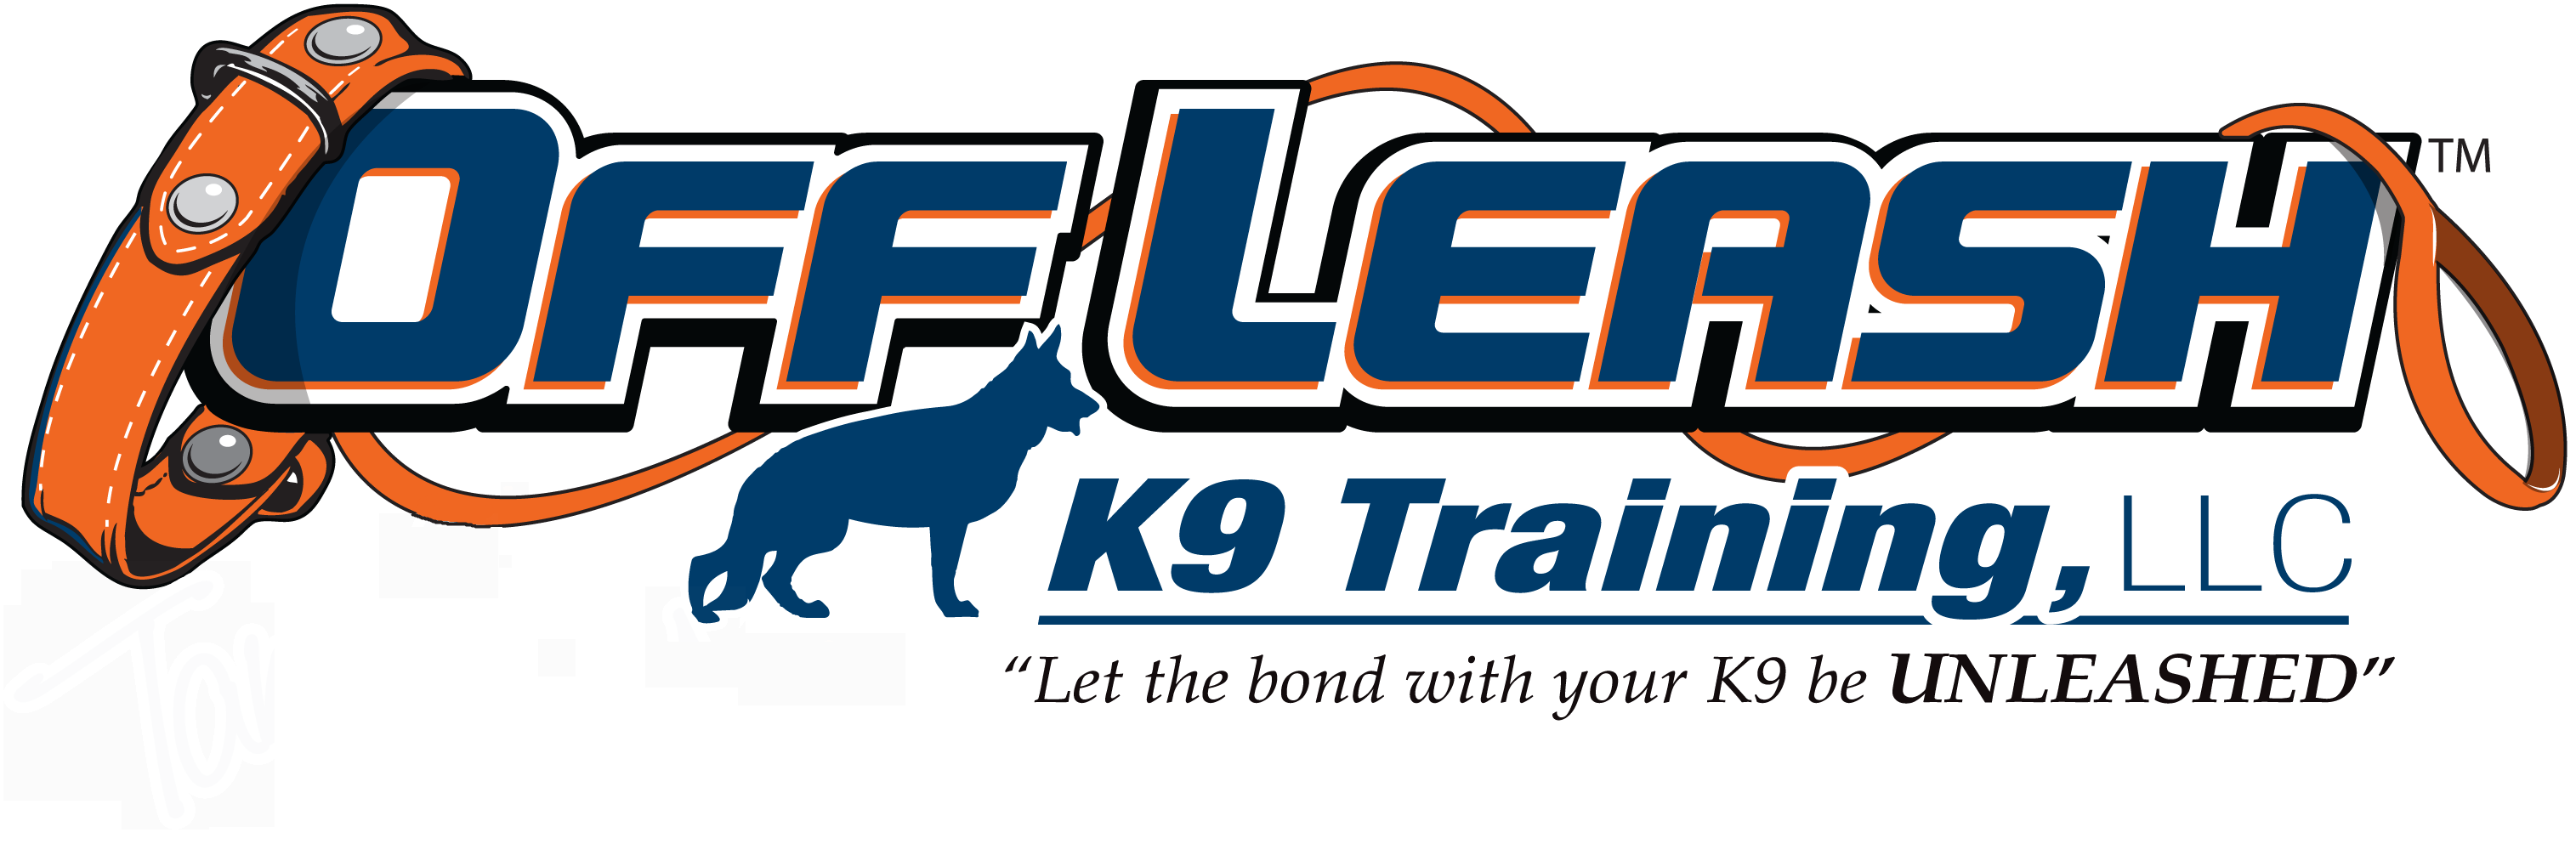 Vermont Offleash K9 Dog Training